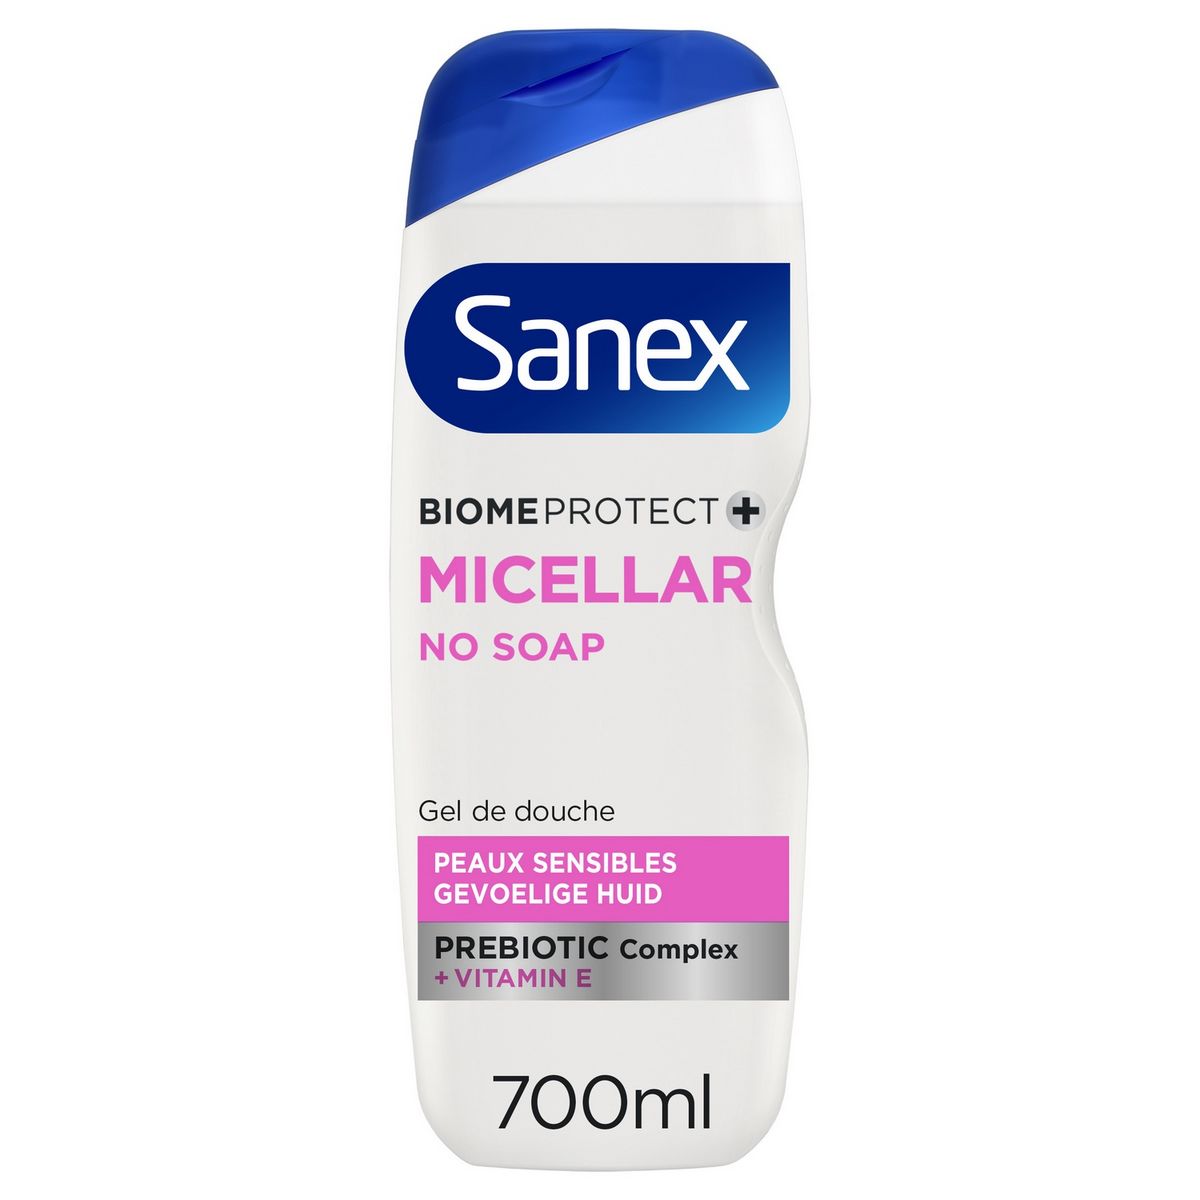 SANEX Gel douche biome protect micellar sans savon pour peaux sensibles 700ml